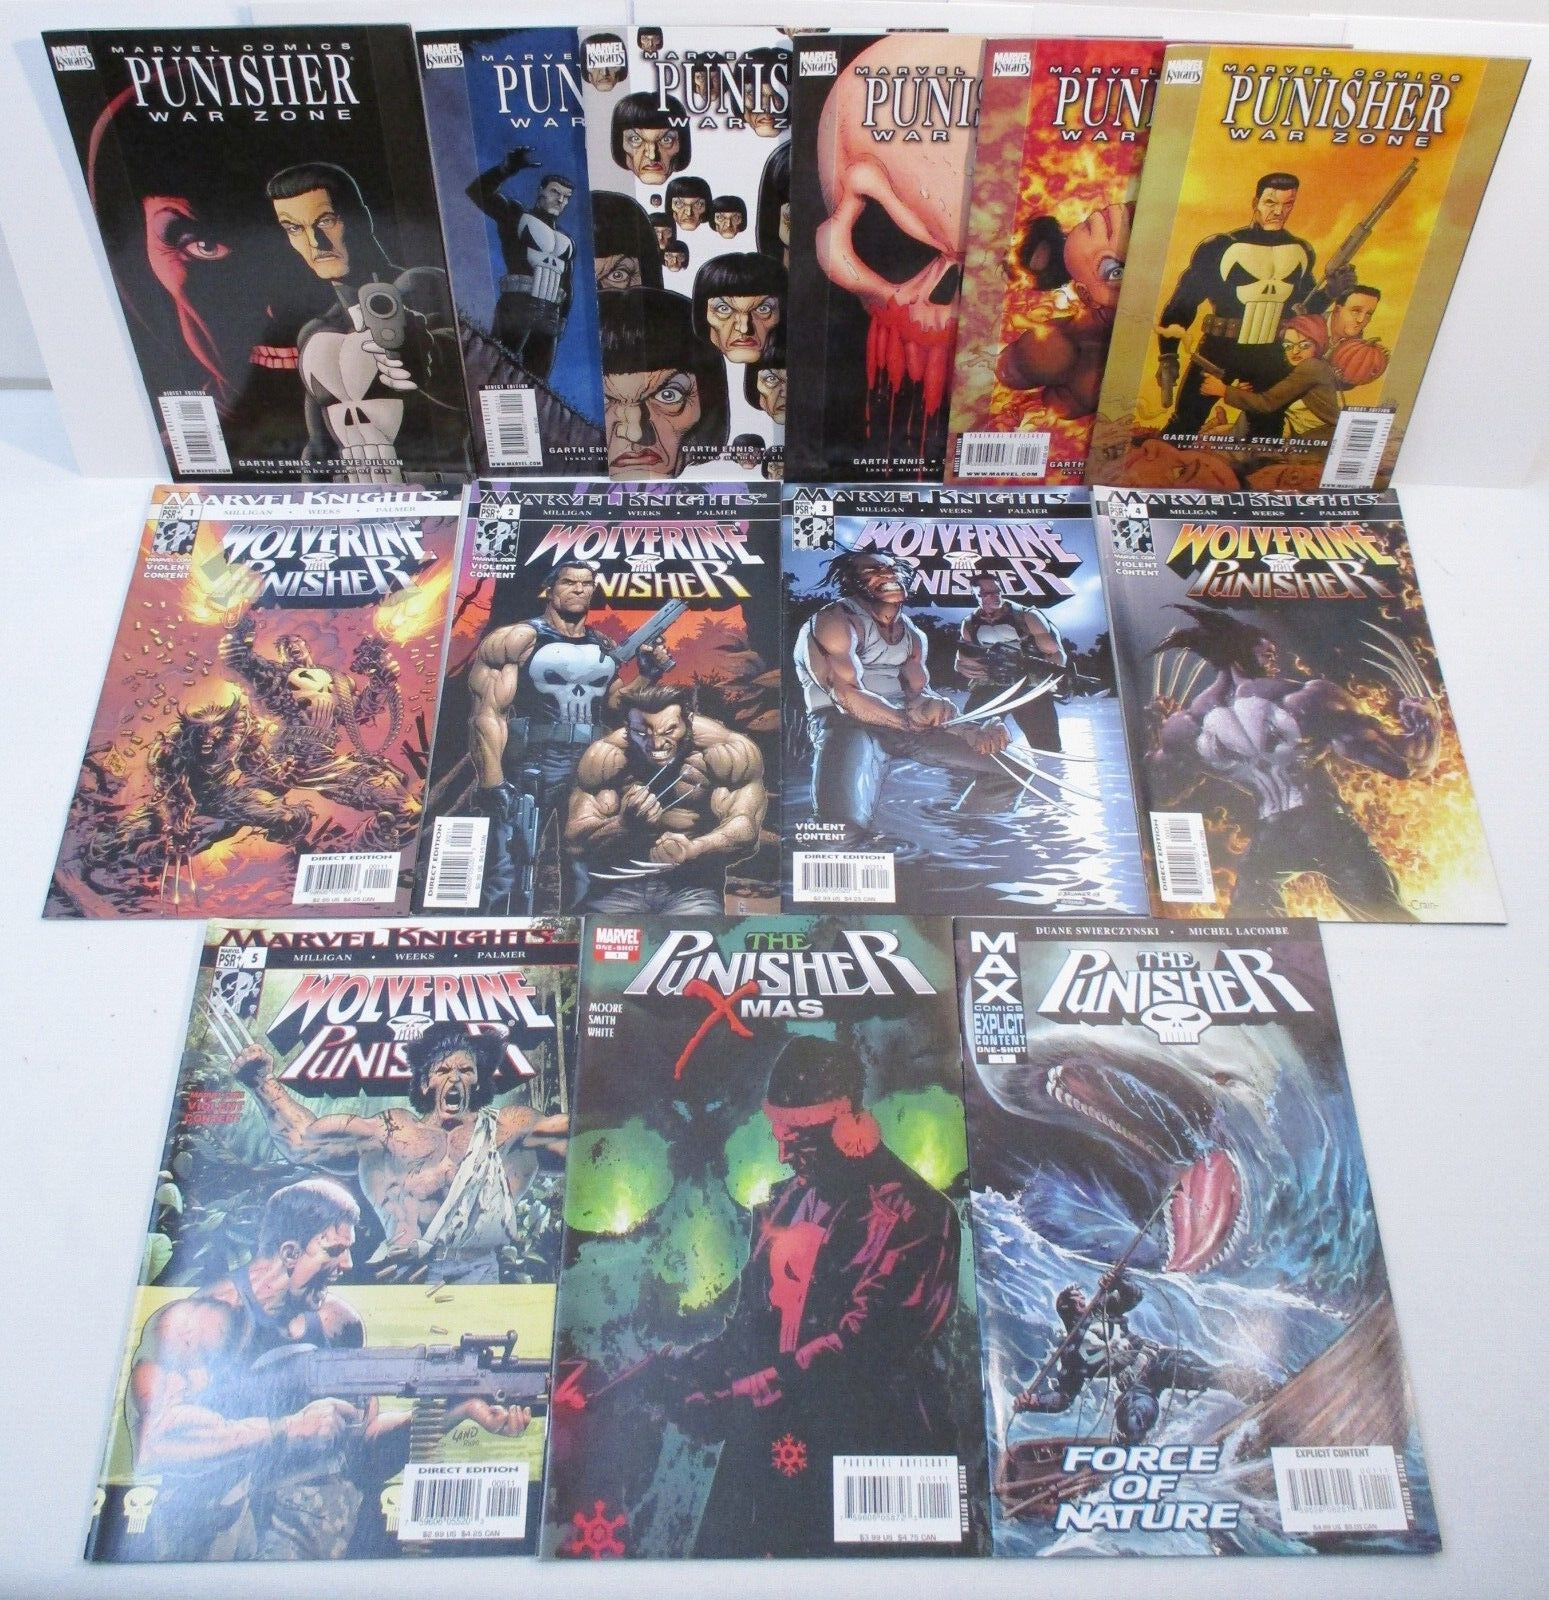 Wolverine / Punisher #1 - 5 2004 & Other Punisher Mini Series & One-Shots